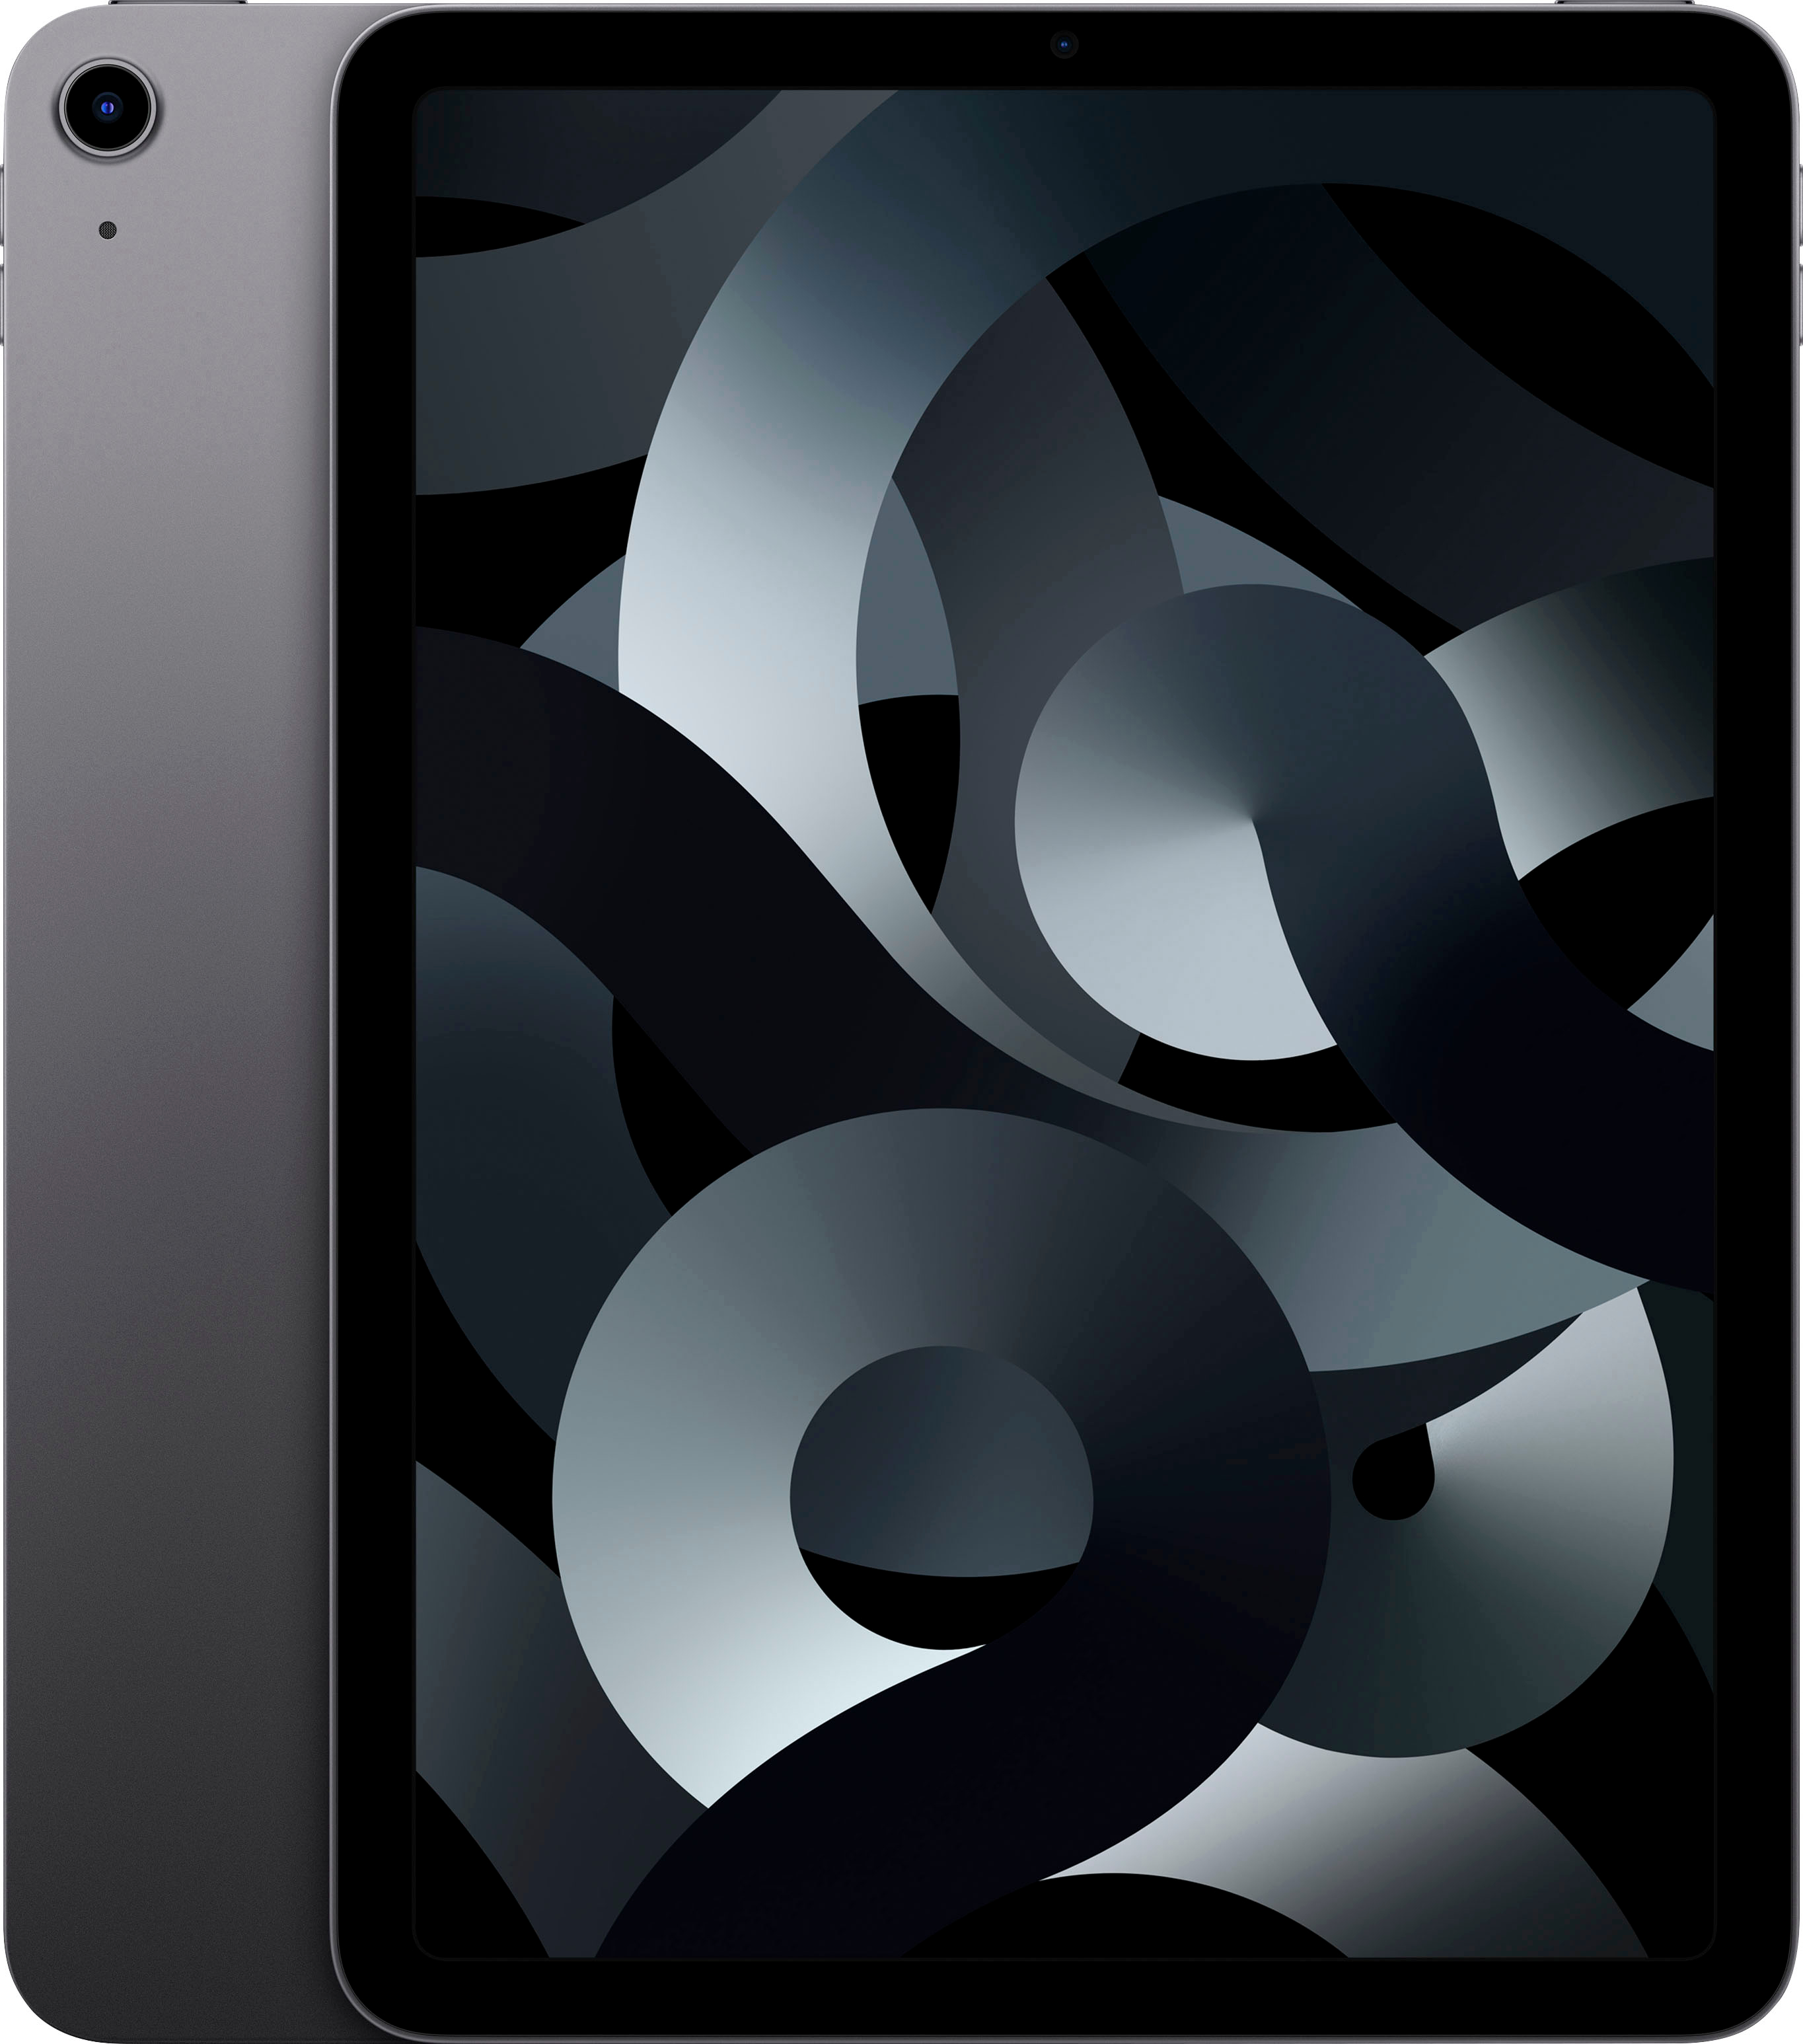  Apple iPad Air 2, 16 GB, Space Gray (Renewed) : Electronics